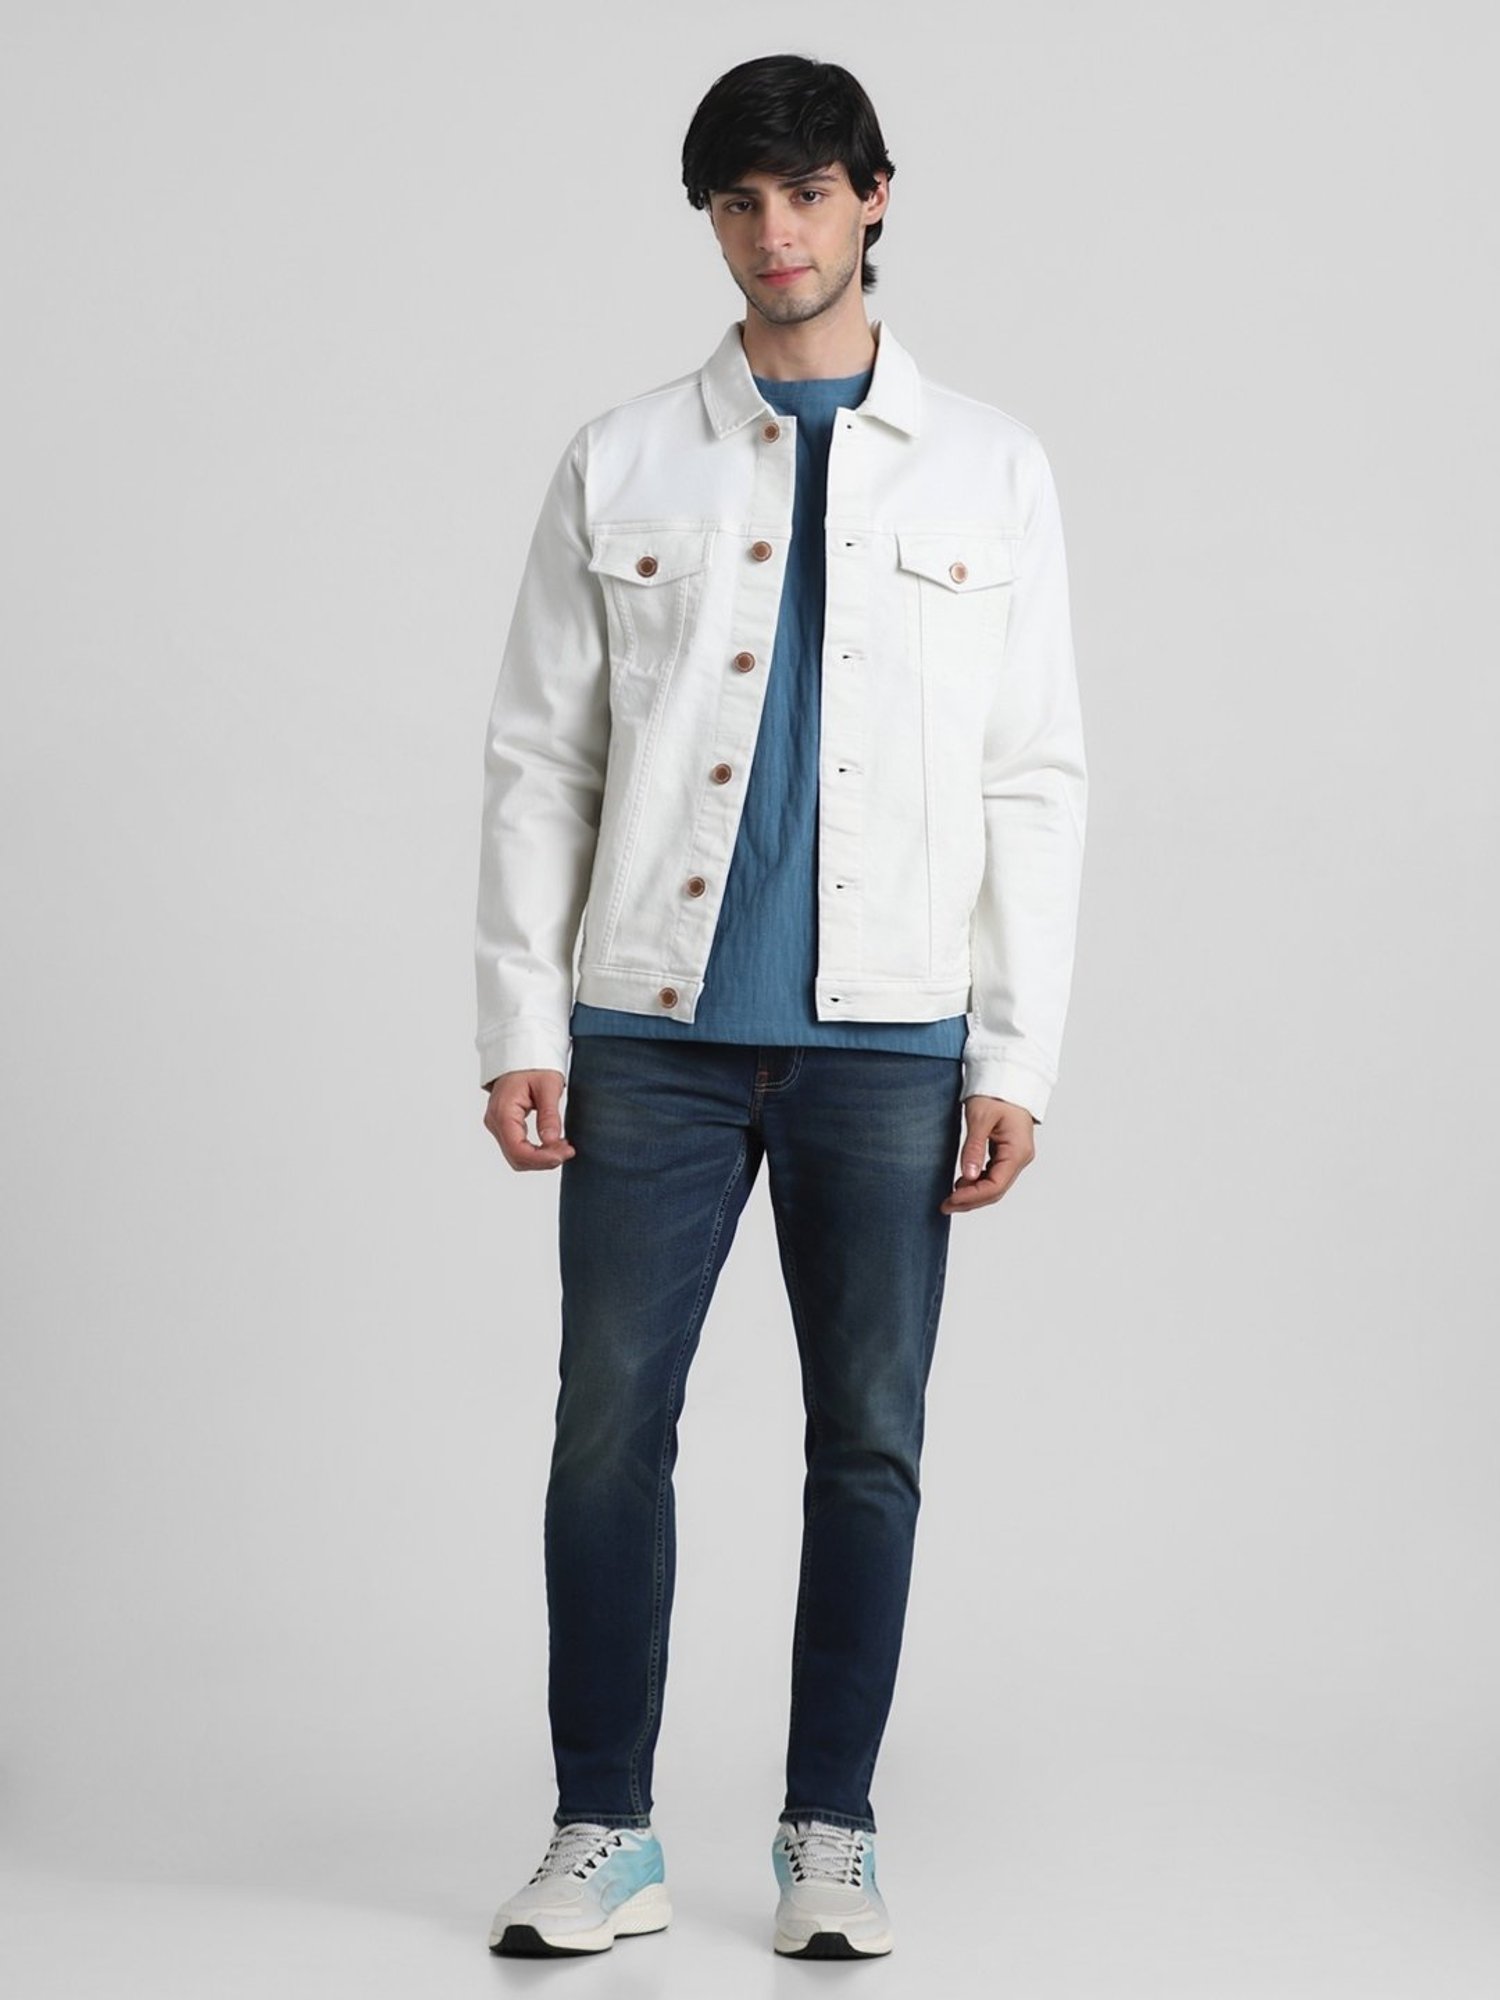 Contextualized products | Sleeveless denim jackets, Denim jacket outfit,  Blue denim jacket outfit